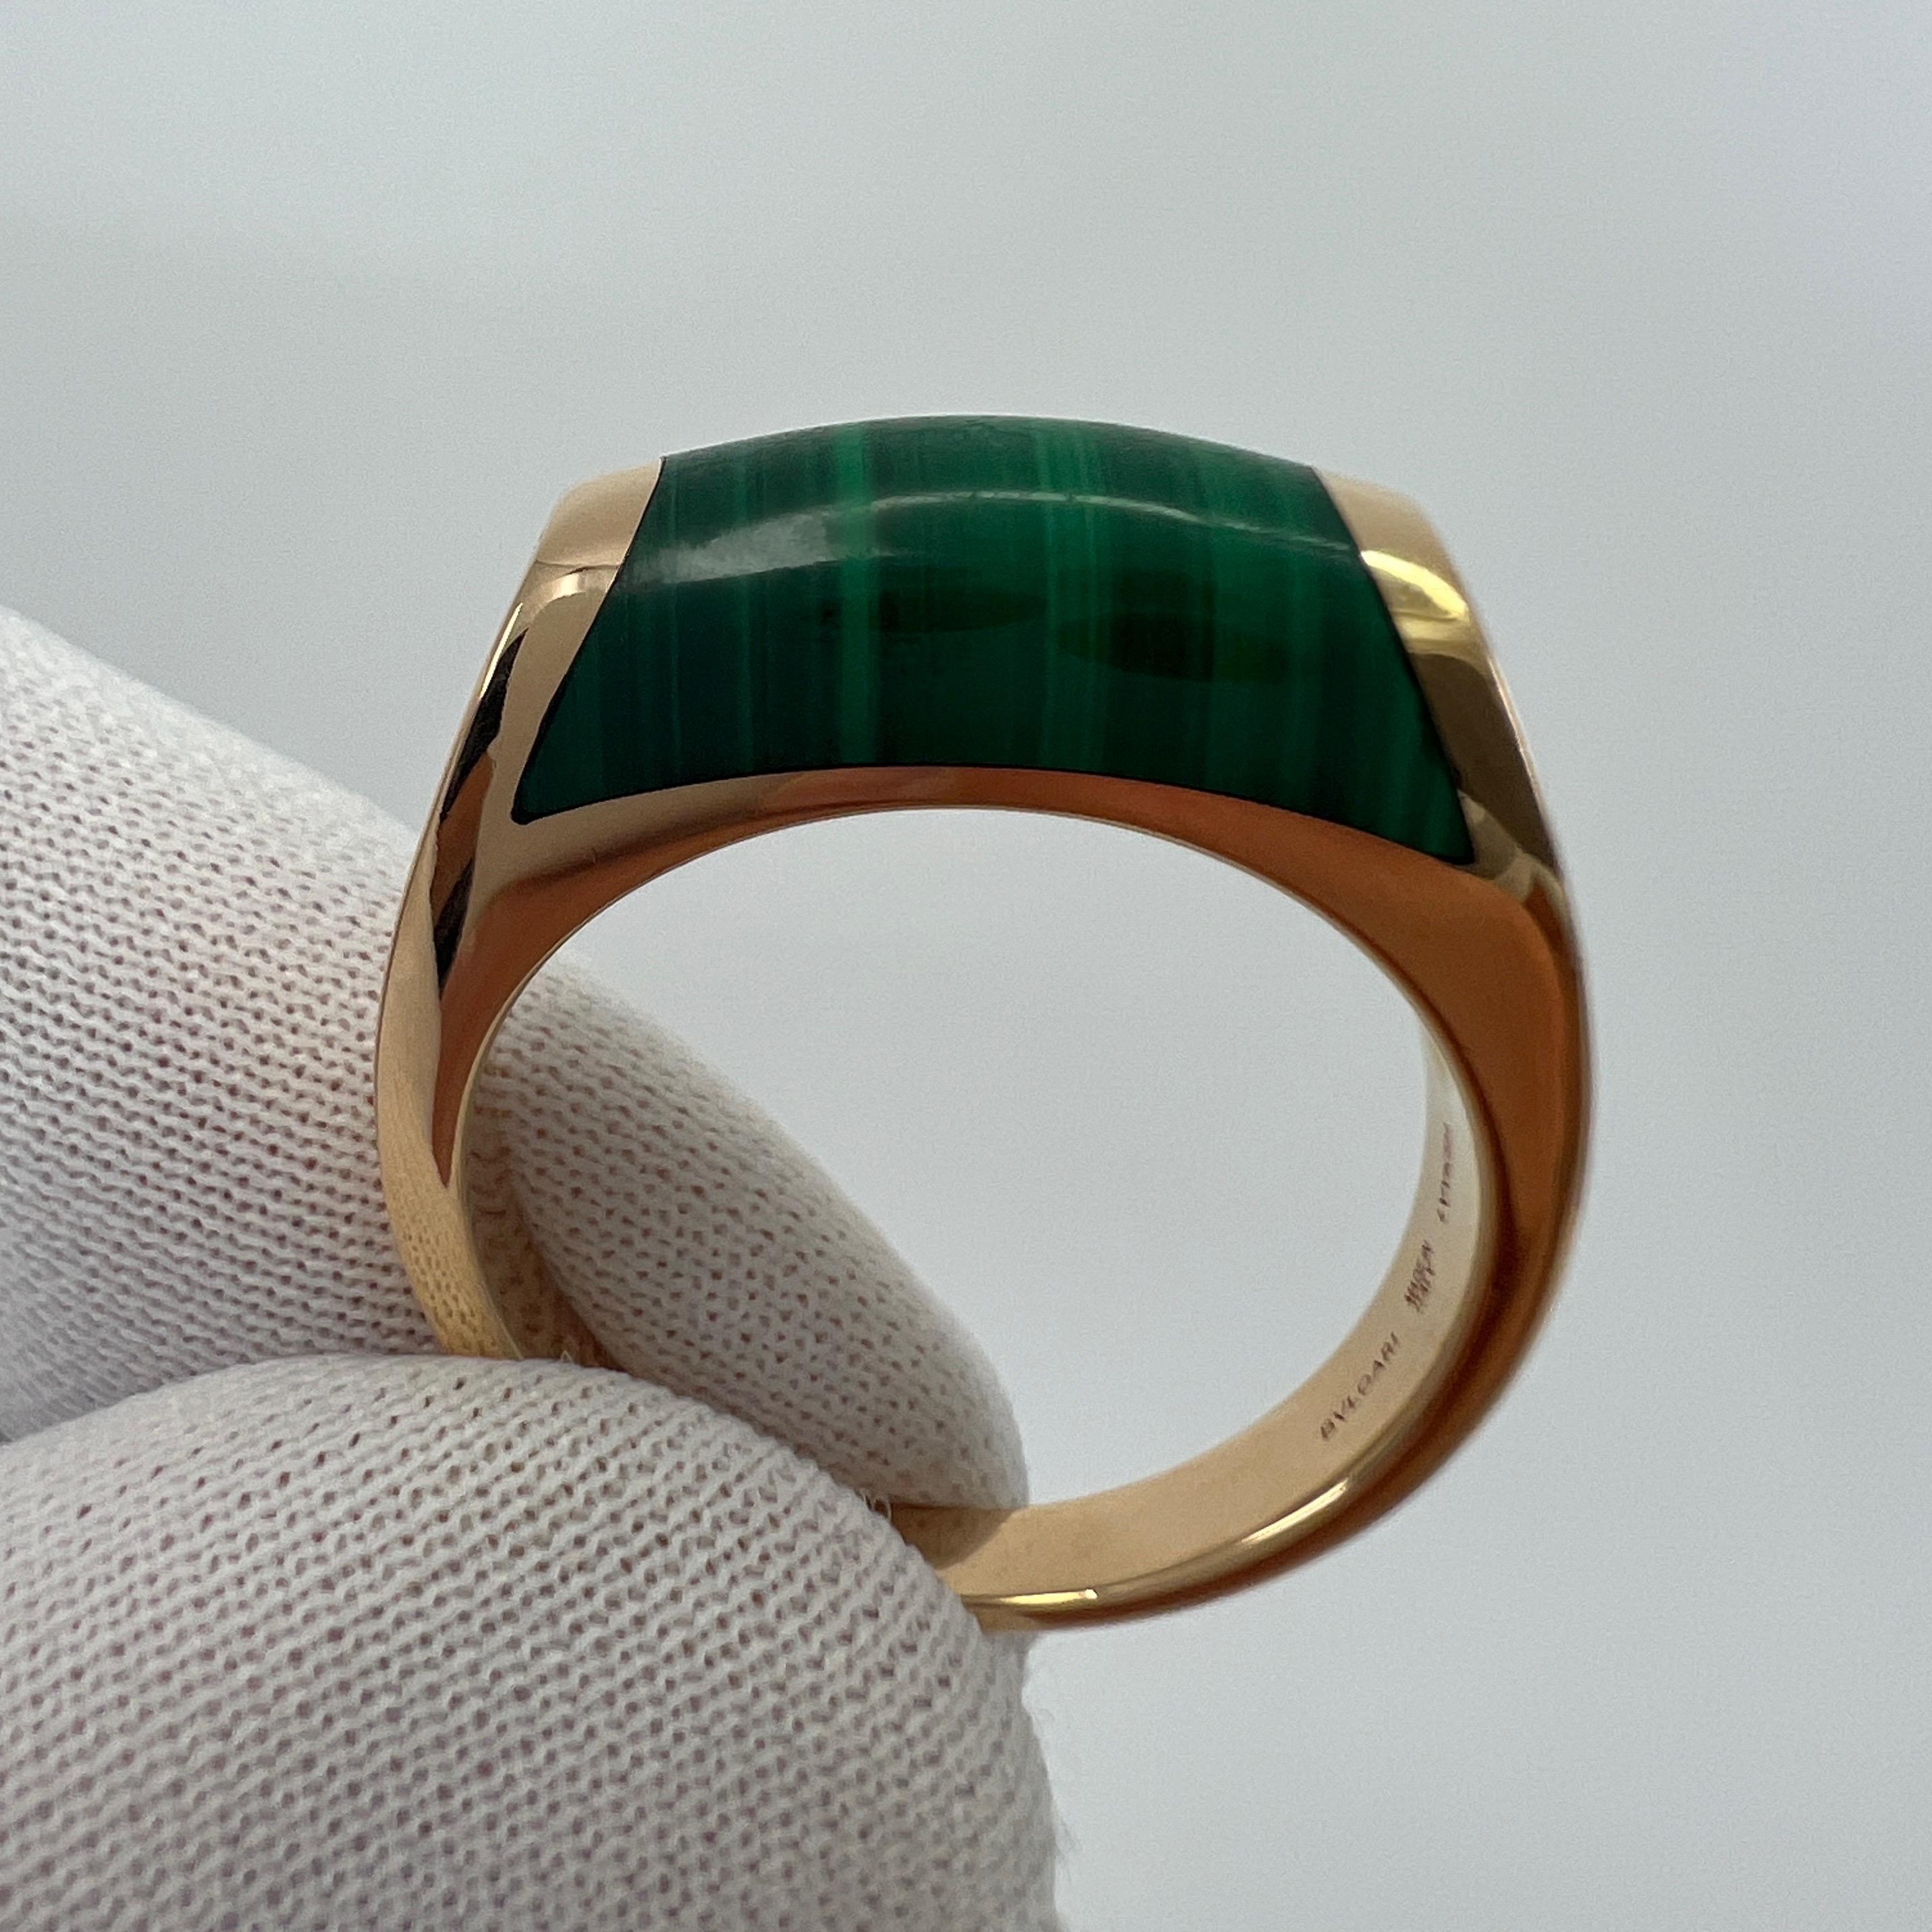 Bvlgari Bulgari Tronchetto Mysa 18k Rose Gold Green Malachite Ring with Box 58 4